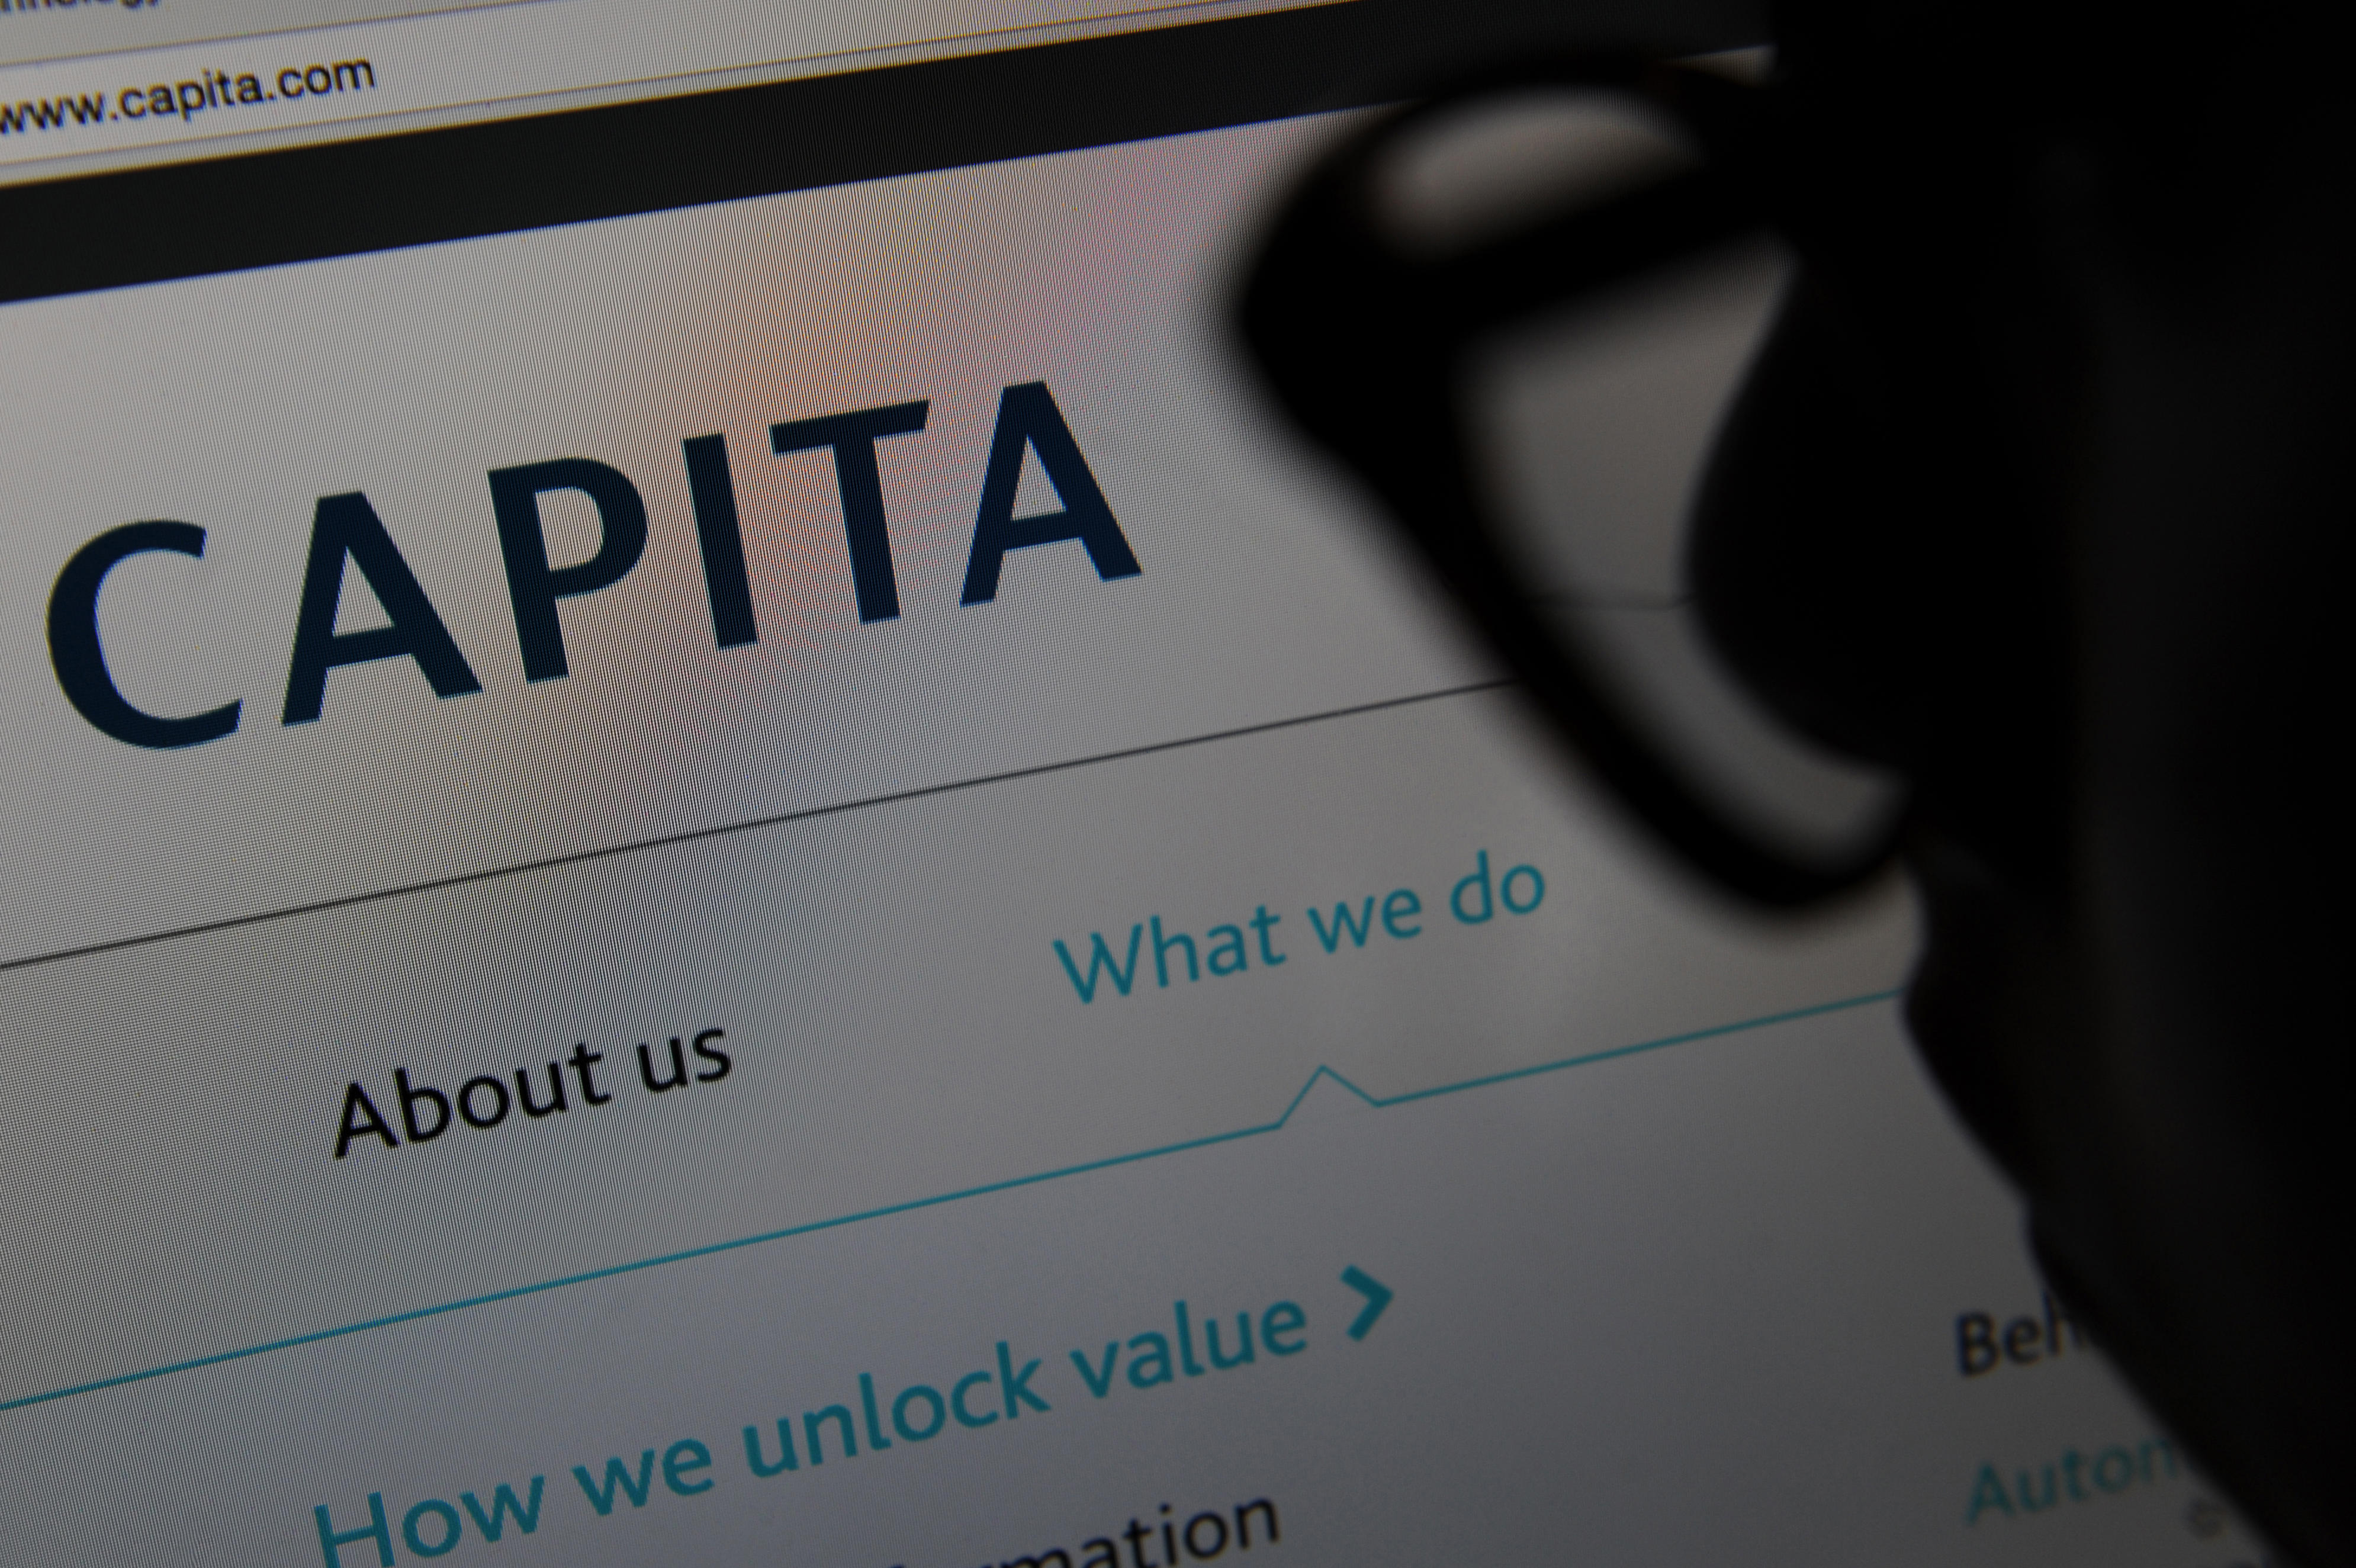 The Capita website